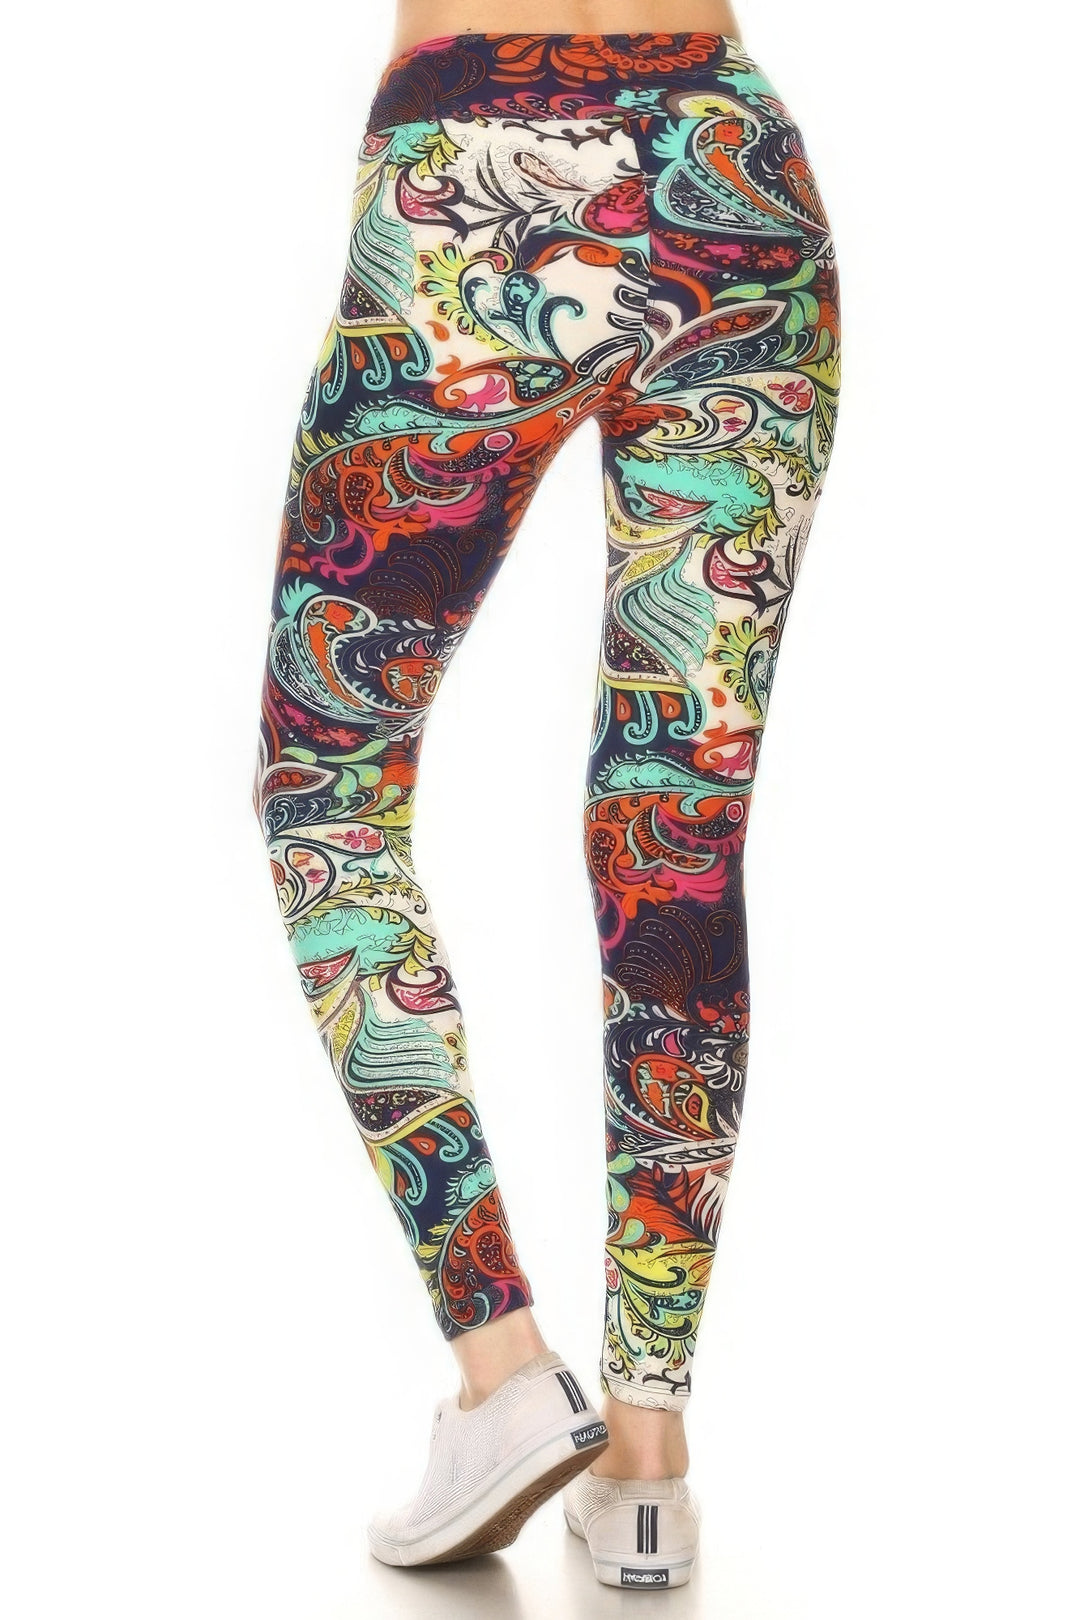 Yoga Style Banded Lined Multicolored Mixed Paisley Print, Full Length Leggings - bertofonsi